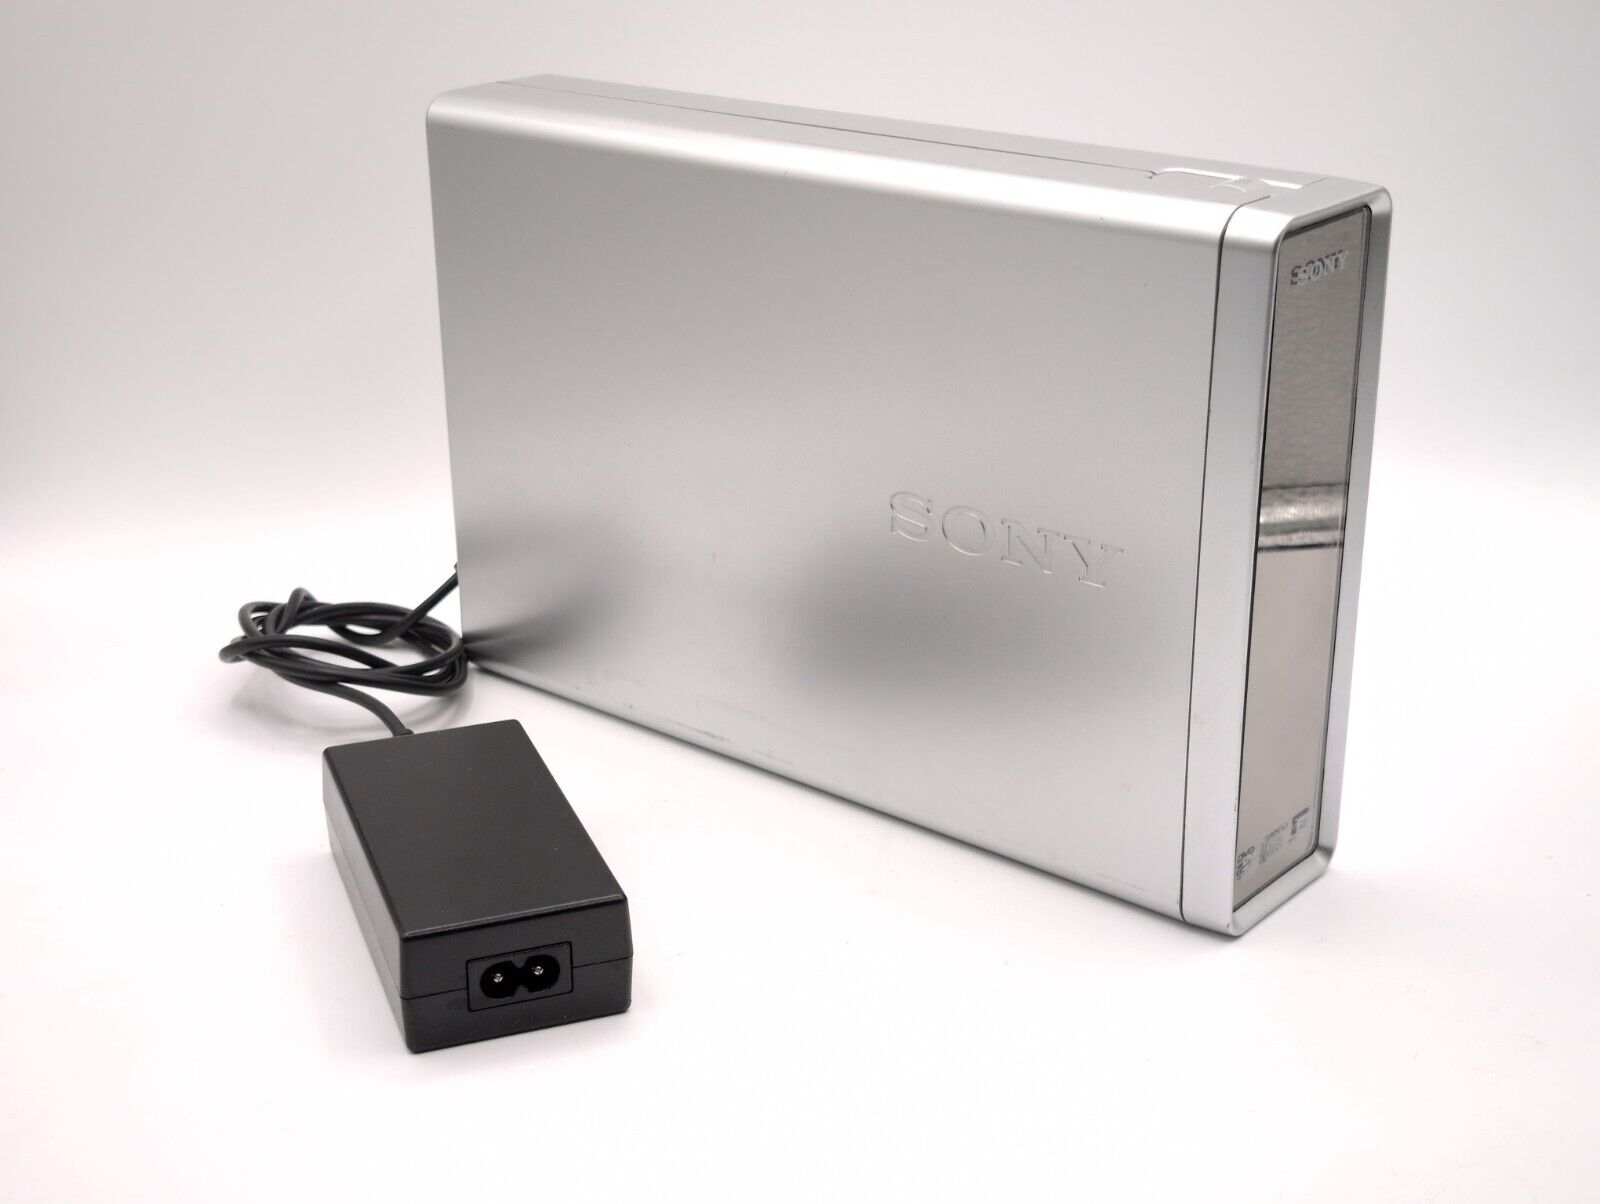 Sony DRX-840U external USB DVD drive